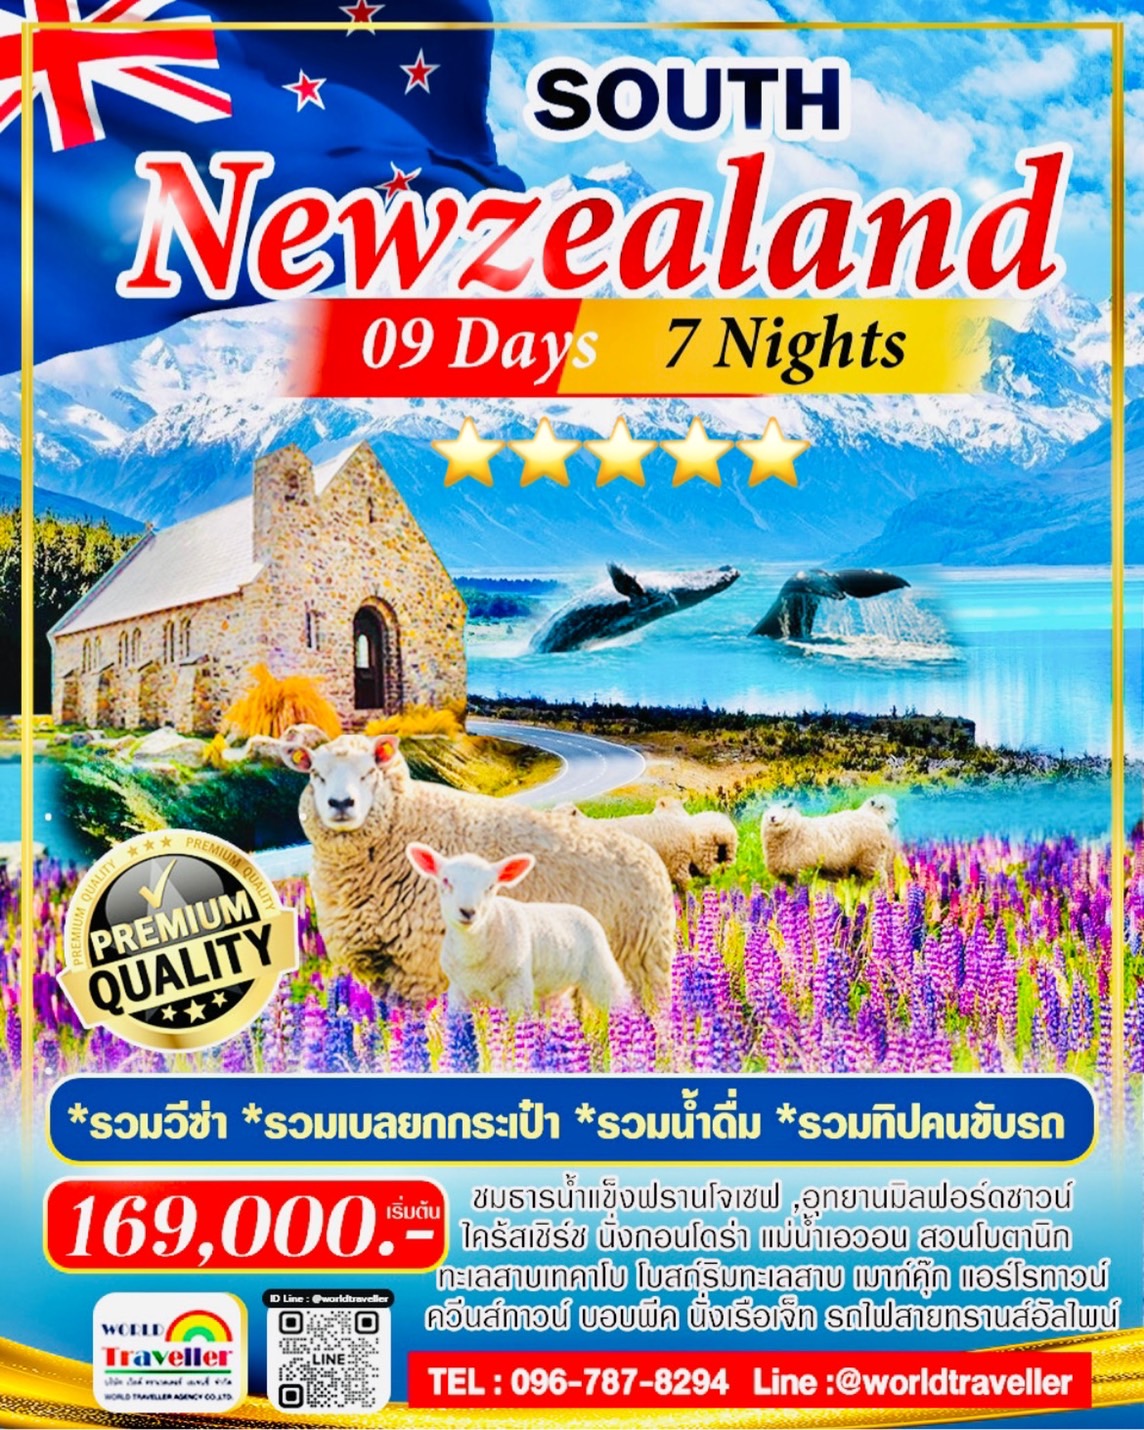 NEW ZEALAND 9 DAYS UNSEEN นิวซีแลนด์-เกาะใต้9วัน7คืน+มิลฟอร์ดซาวน์+รถไฟอัลไพน์ สงกรานต์-ต.ค.เปิดจอง!